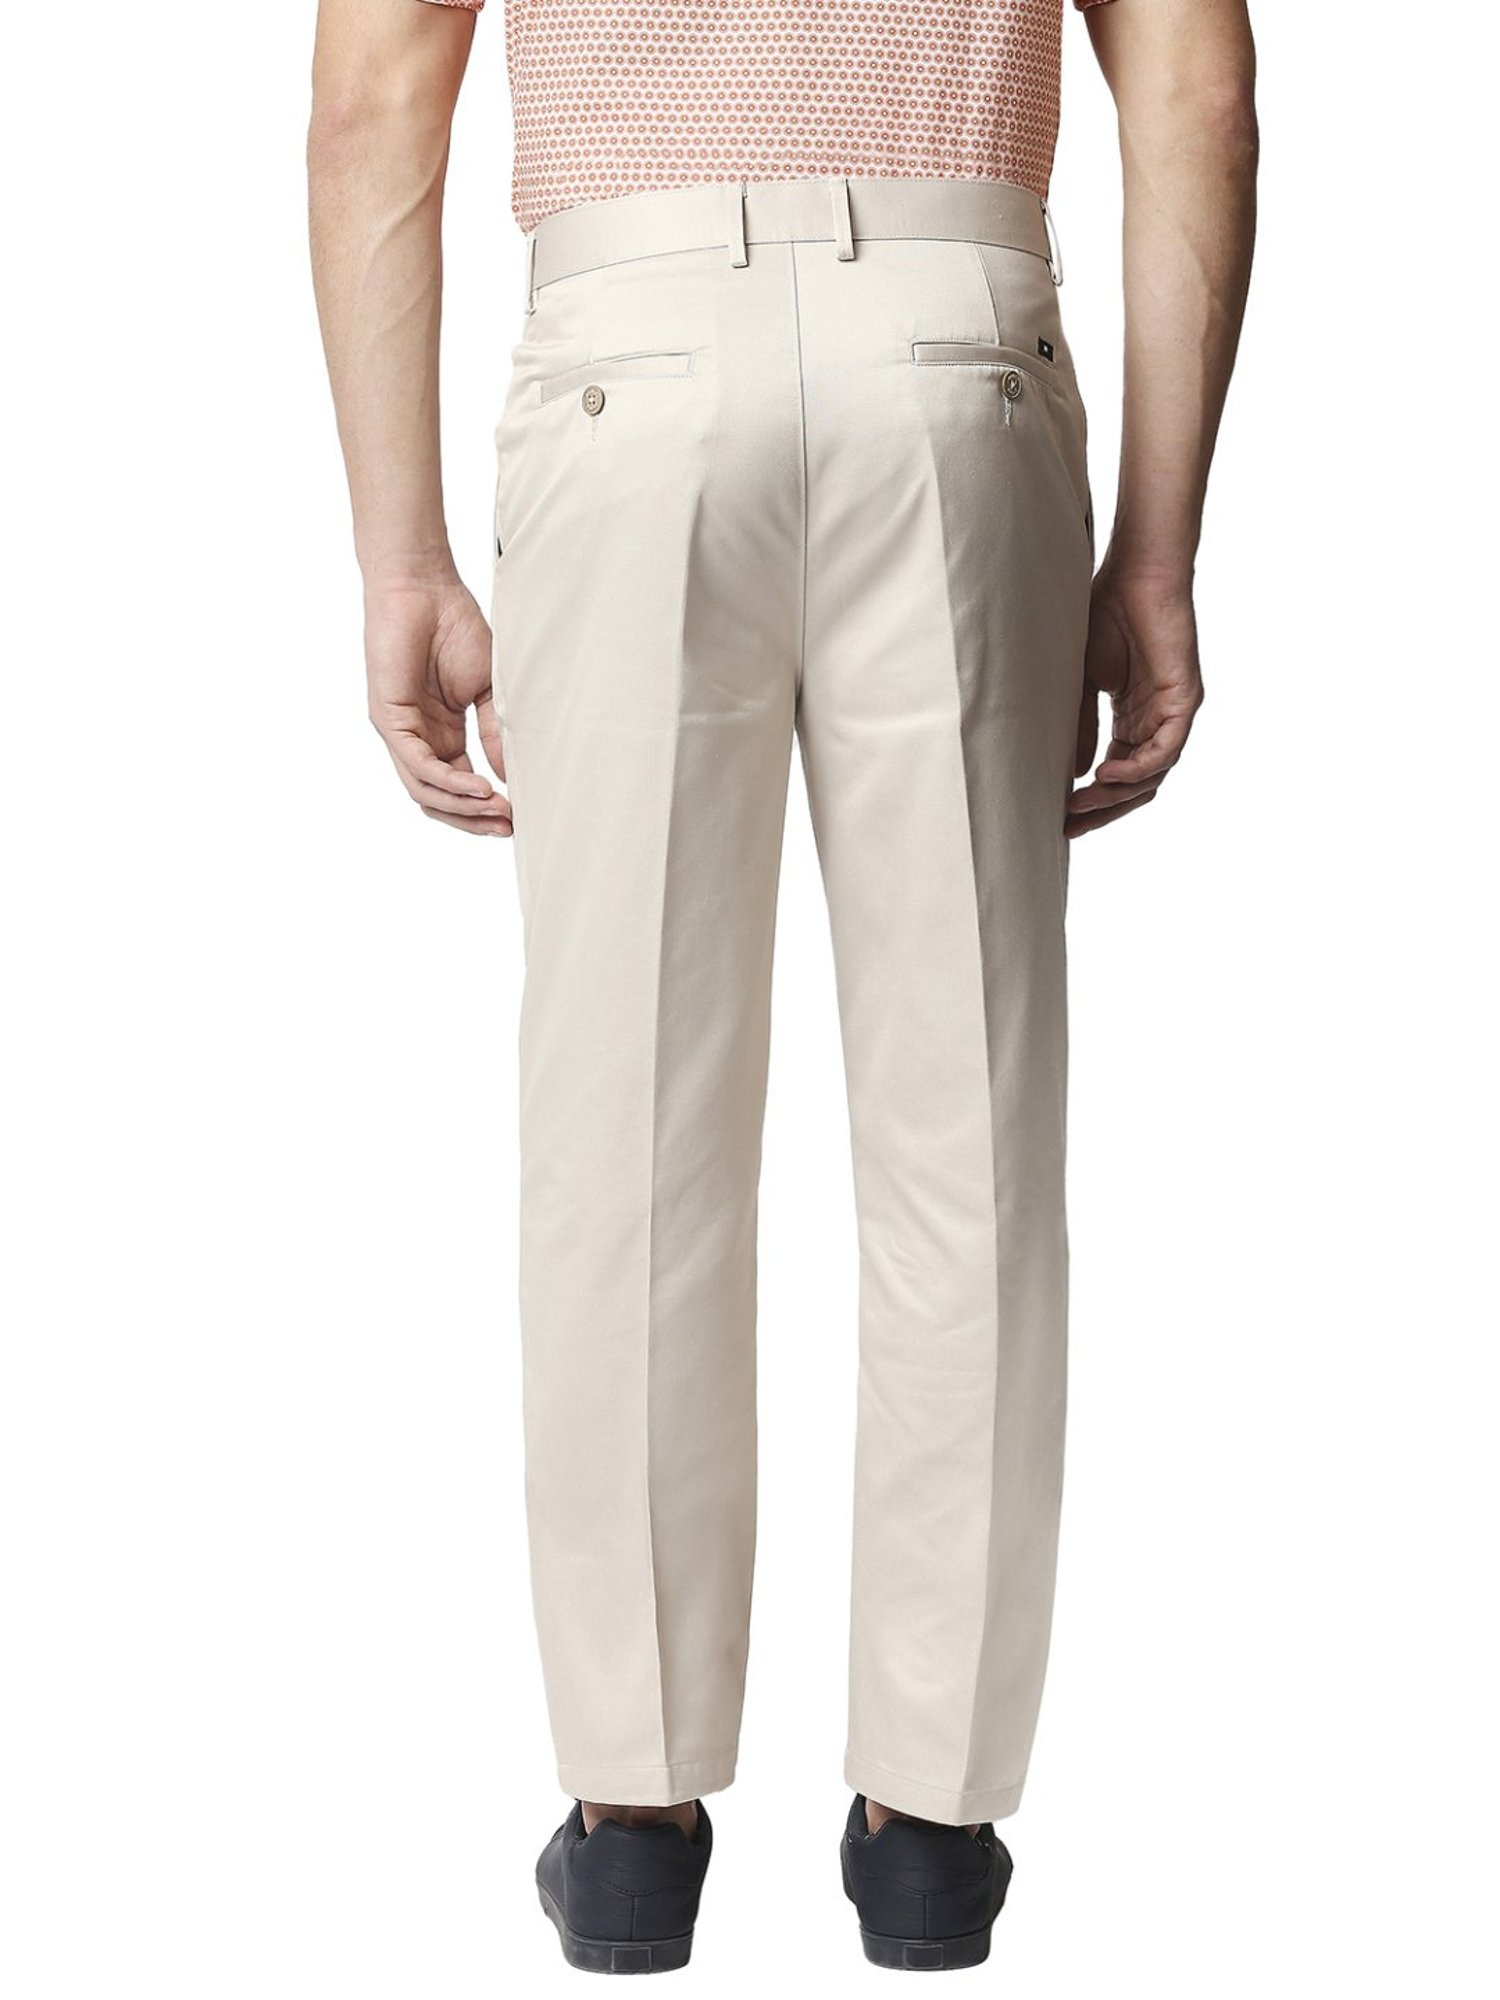 Buy Basics Grey Mid Rise Comfort Fit Trousers for Men Online  Tata CLiQ